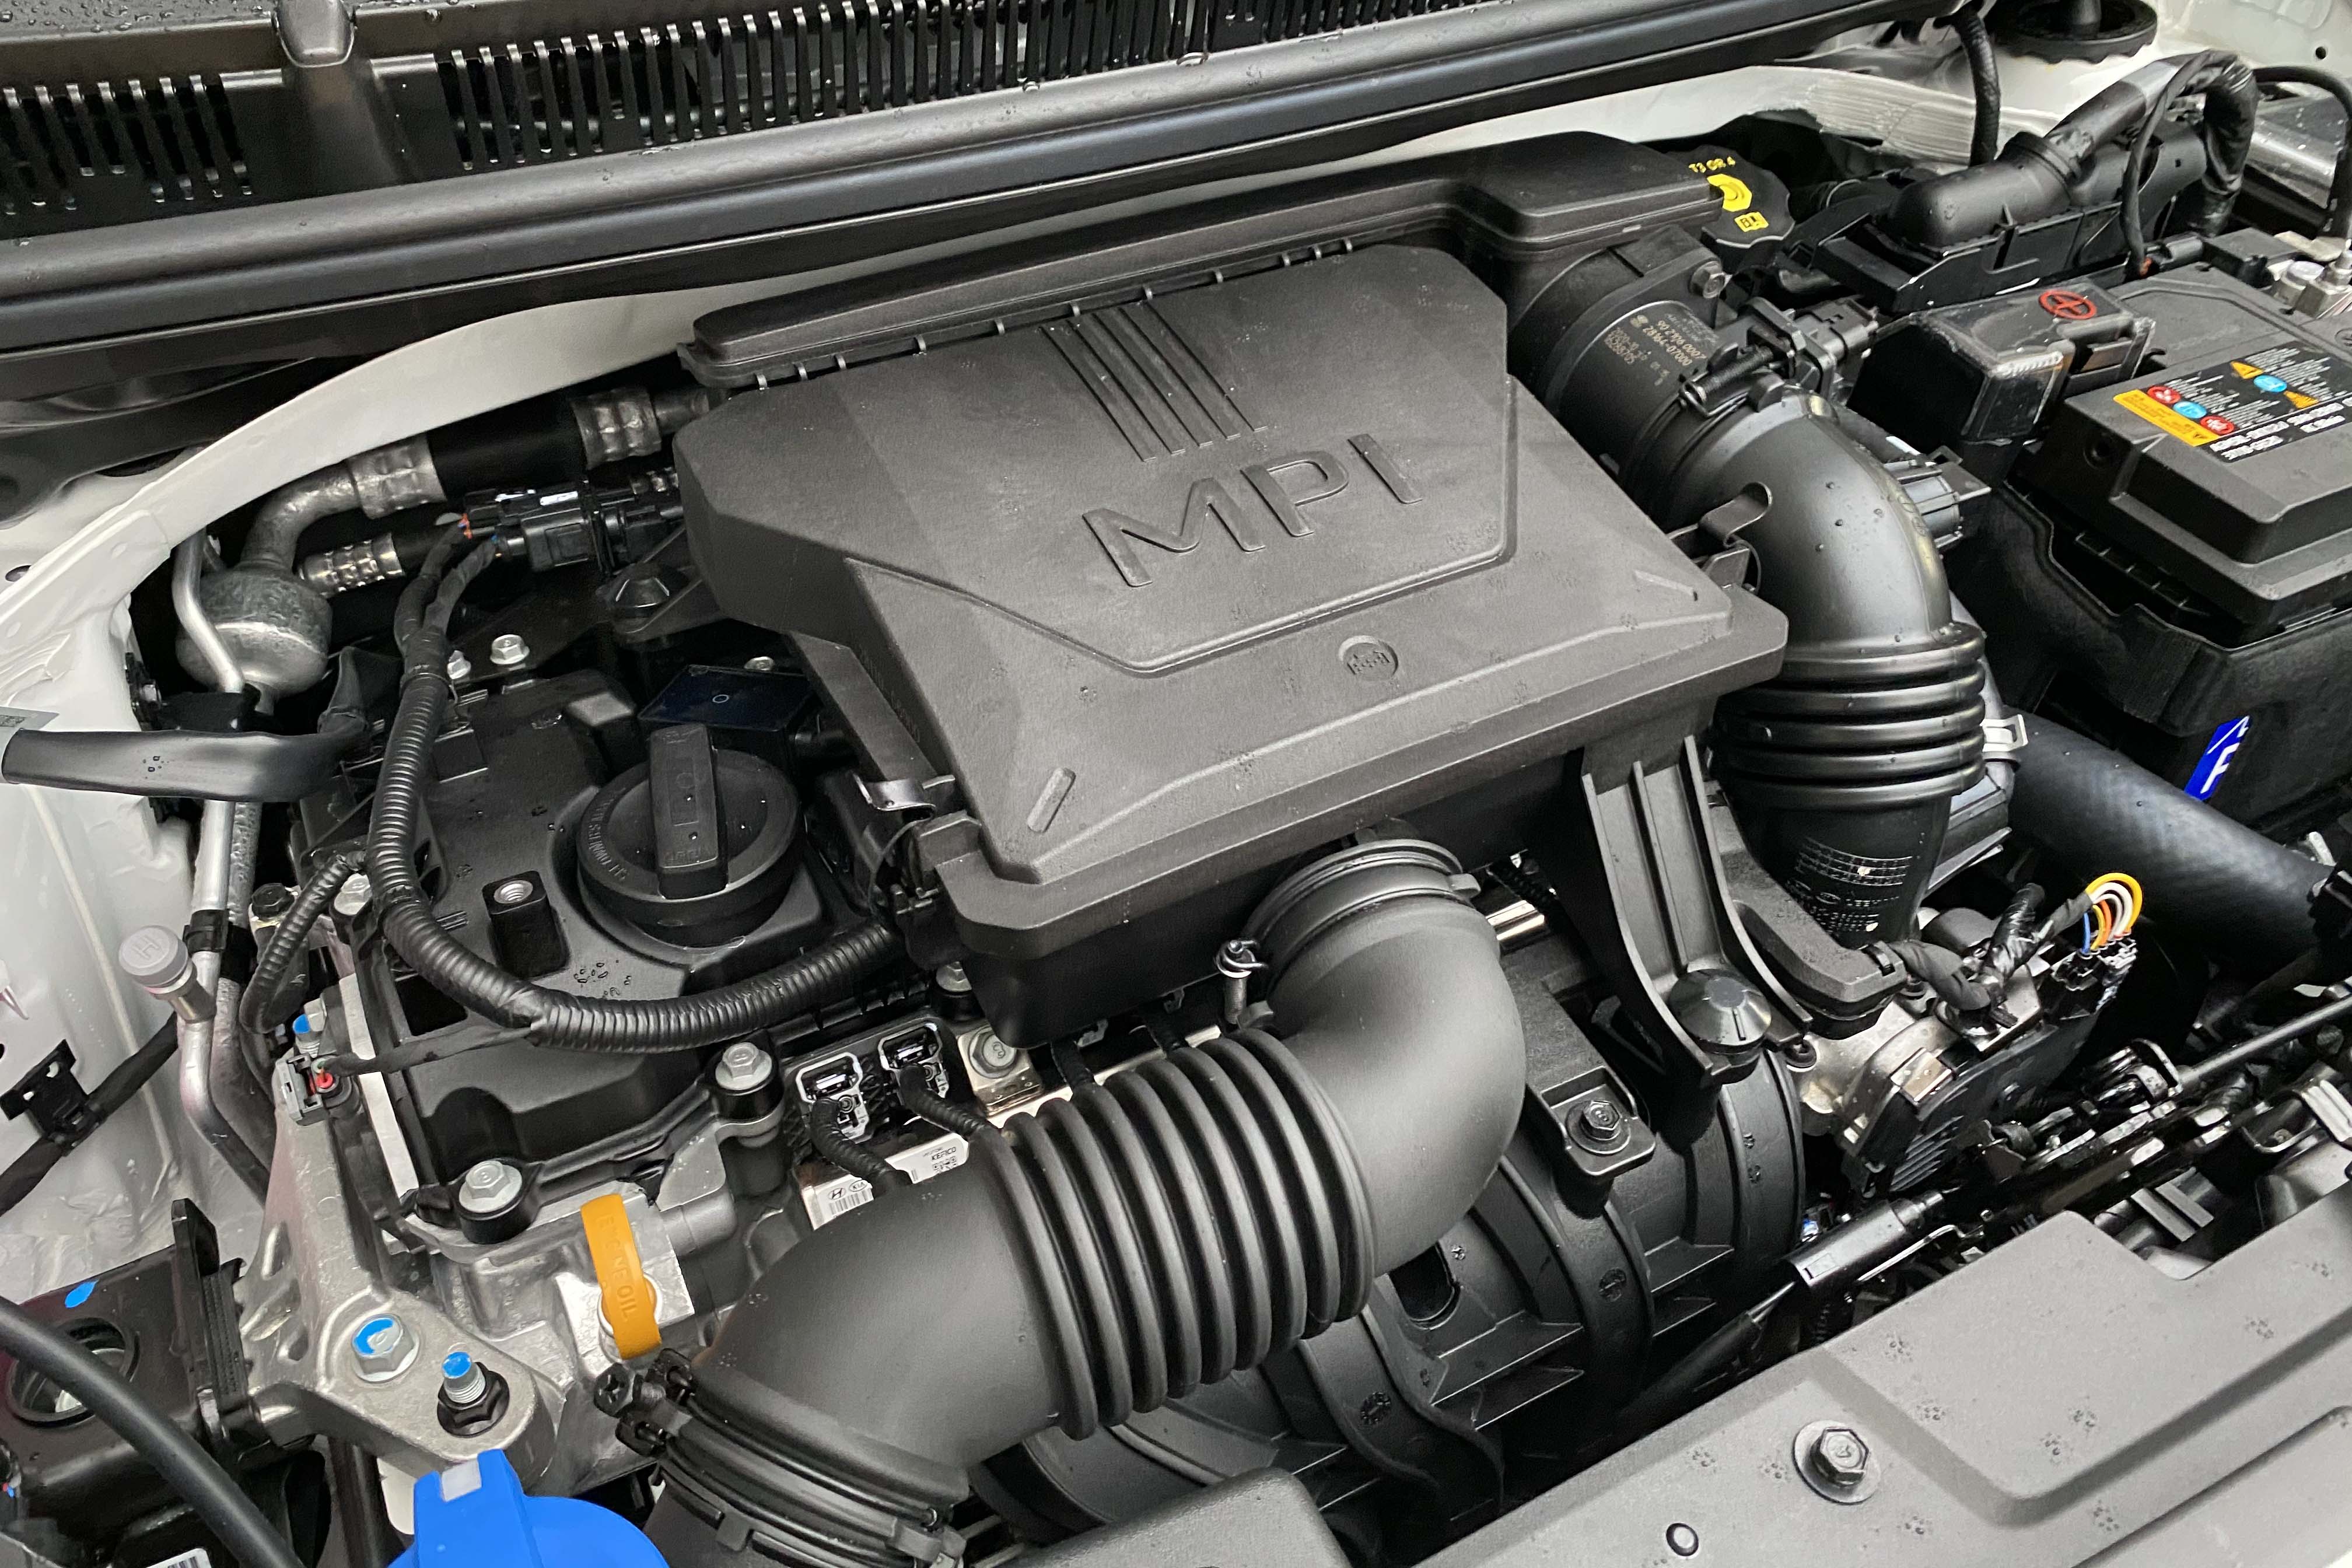 New 1.2 MPI 四缸自然進氣引擎擁有 84 匹的最大馬力與 12.0kgm 的最大扭力。